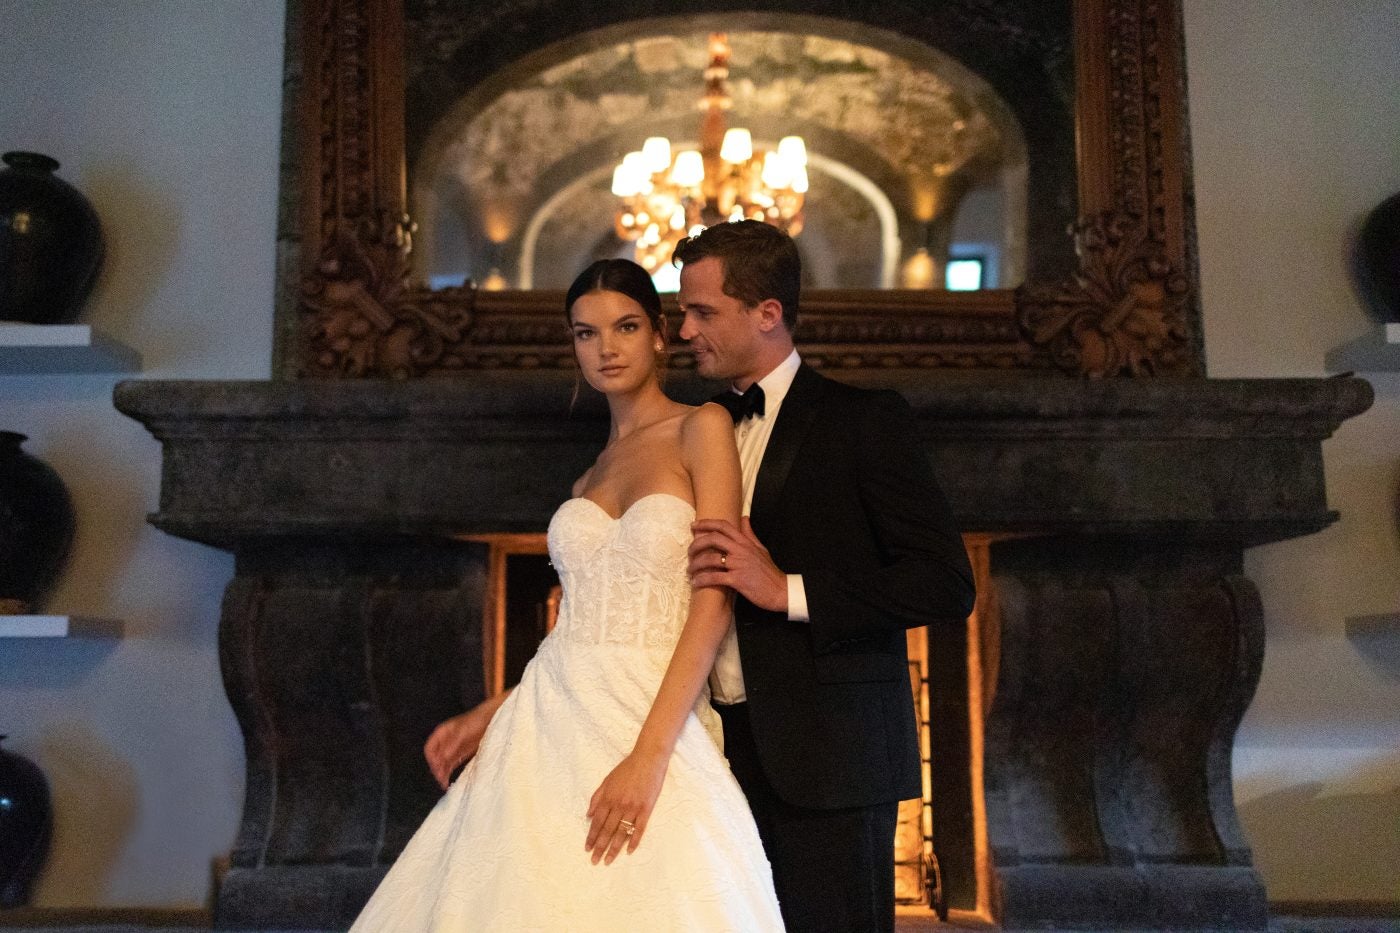 Corset Wedding Dresses - Largest Selection - Kleinfeld